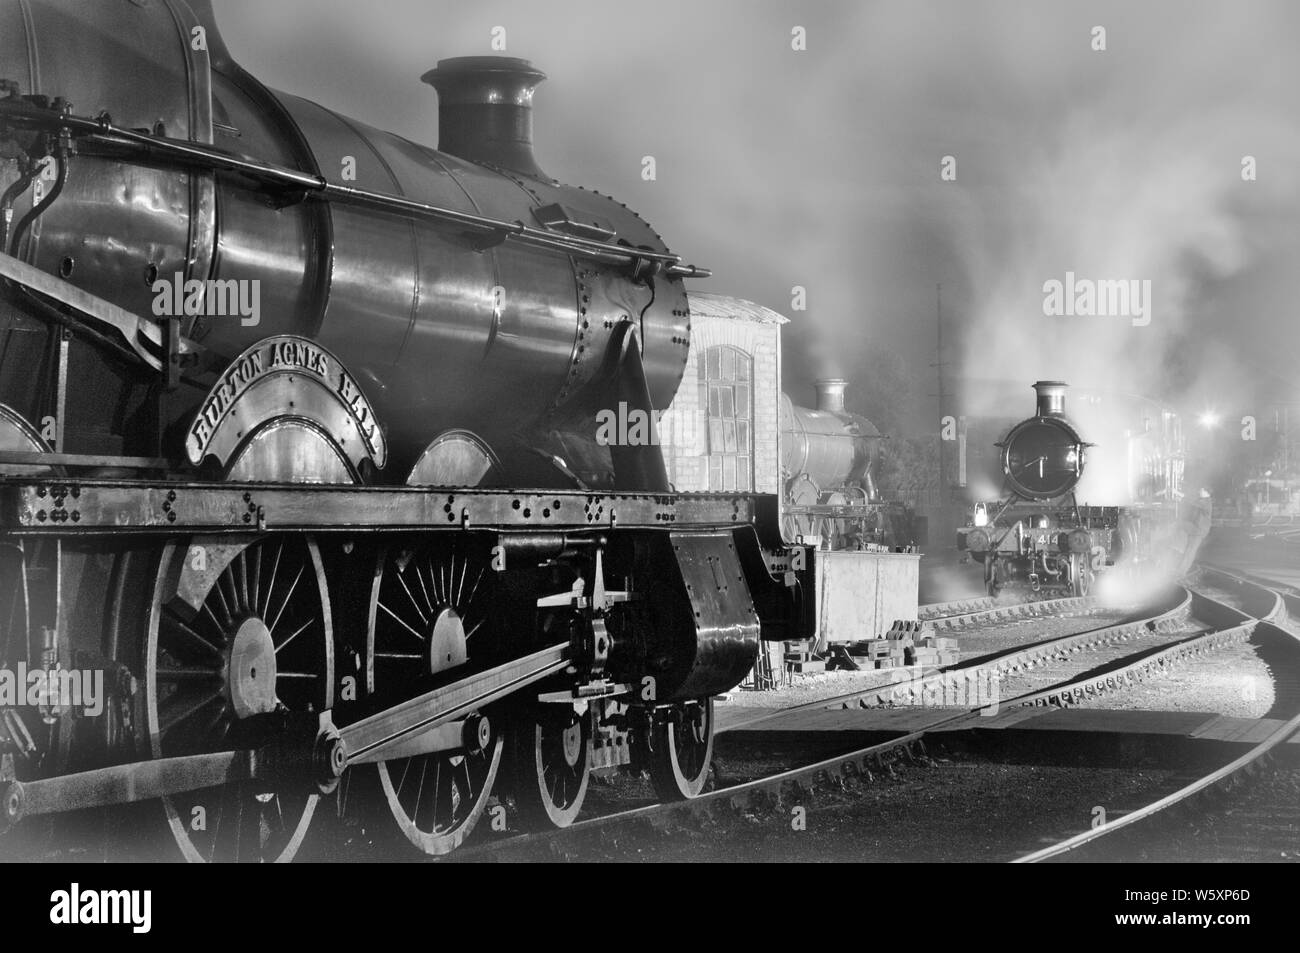 Nostalgic recreation of a steam era railway shed scene, in black and white, emphasizing those past glory days. Stock Photo